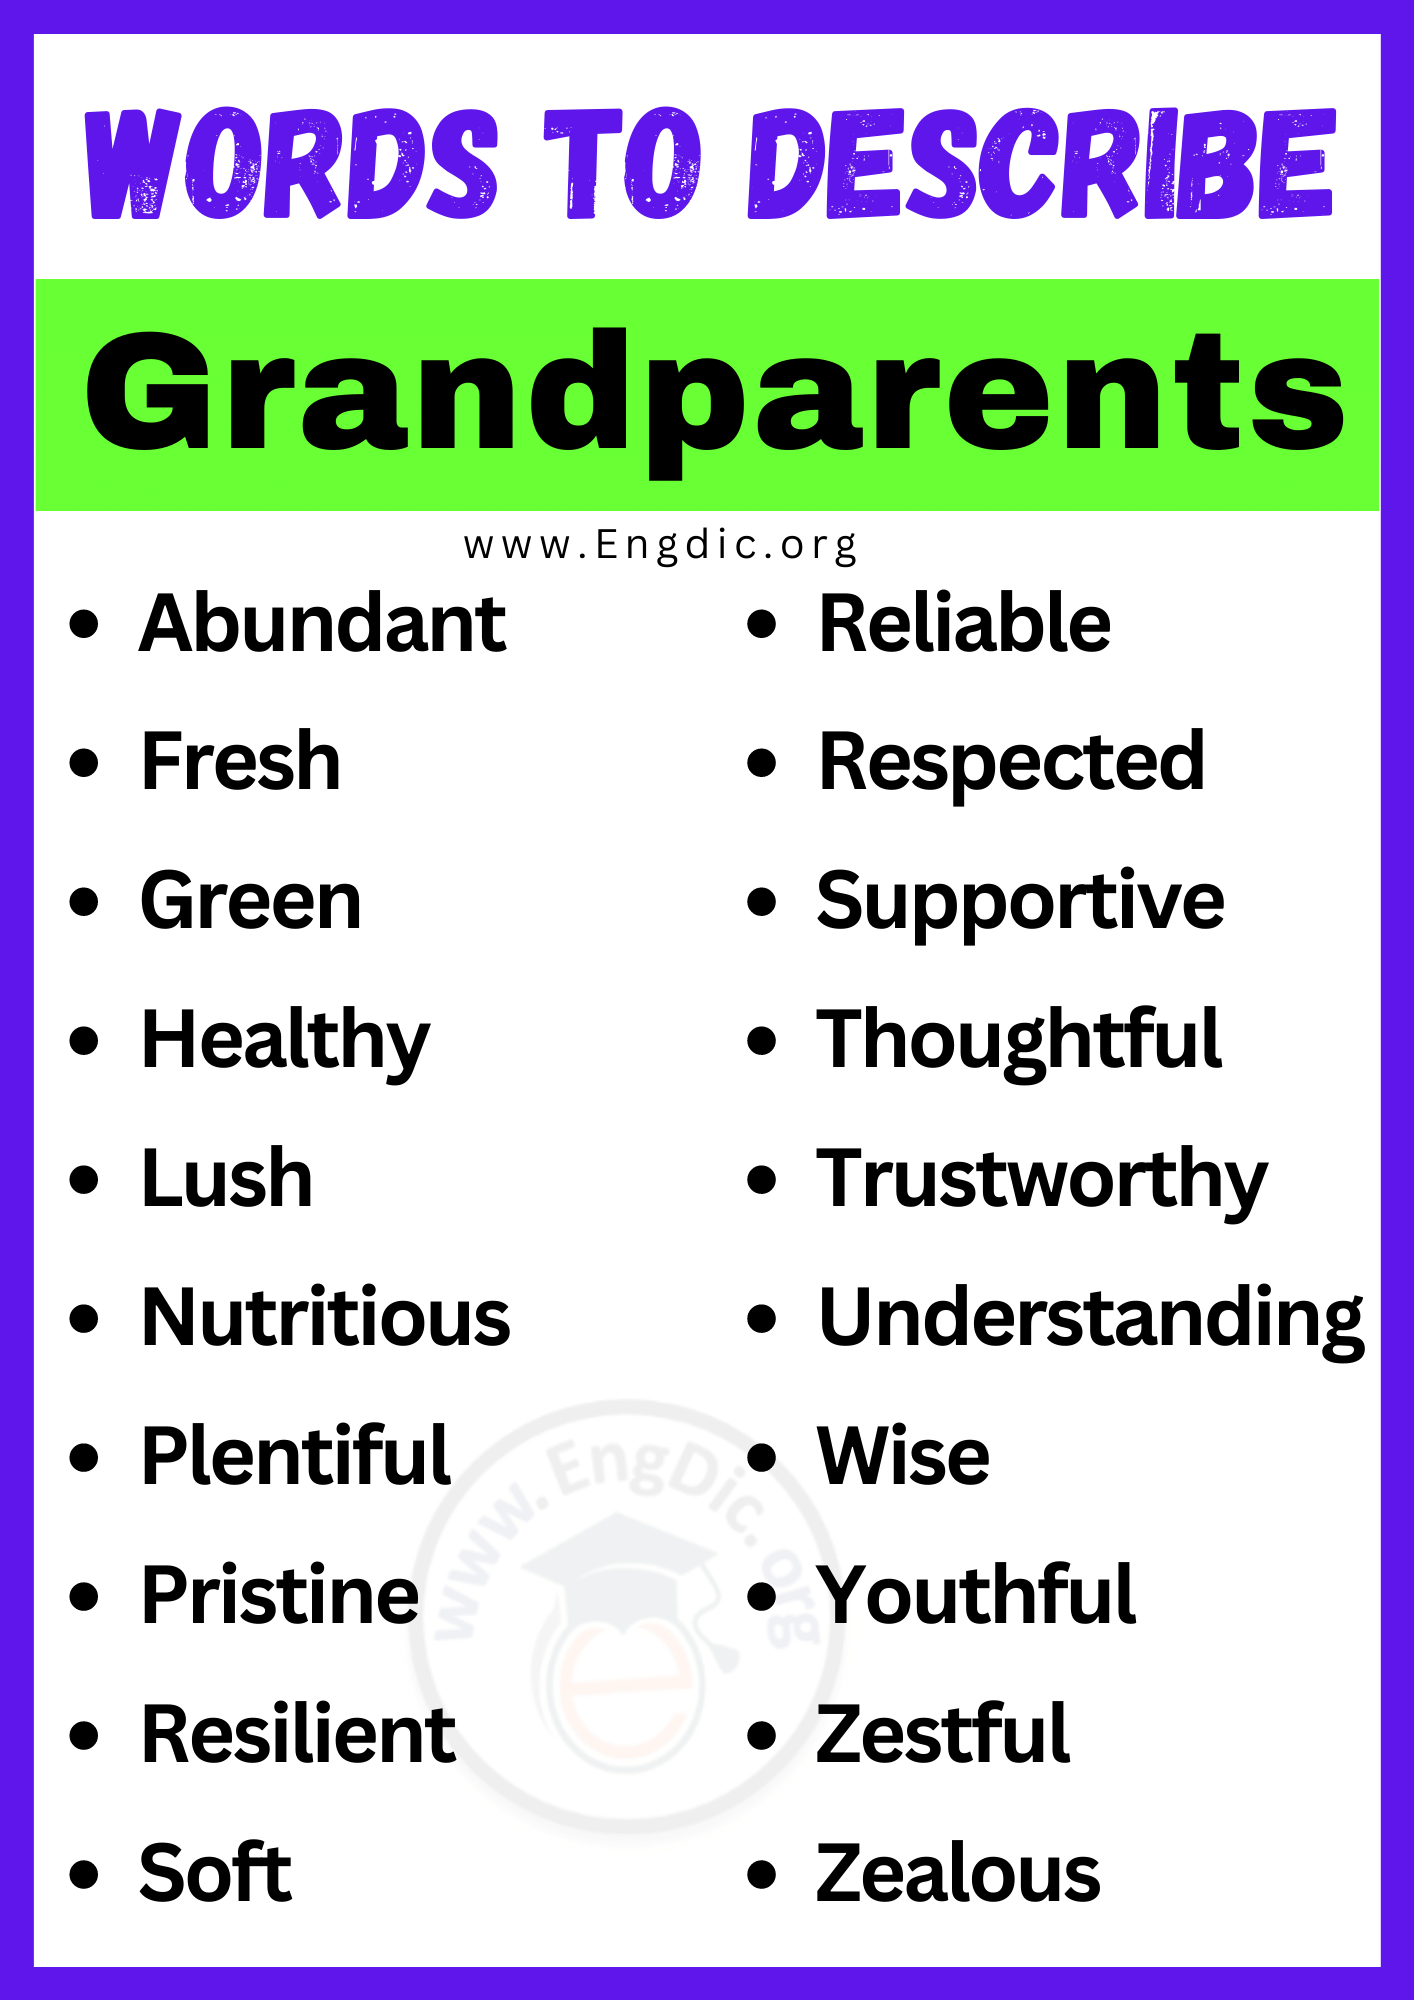 Words to Describe Grandparents